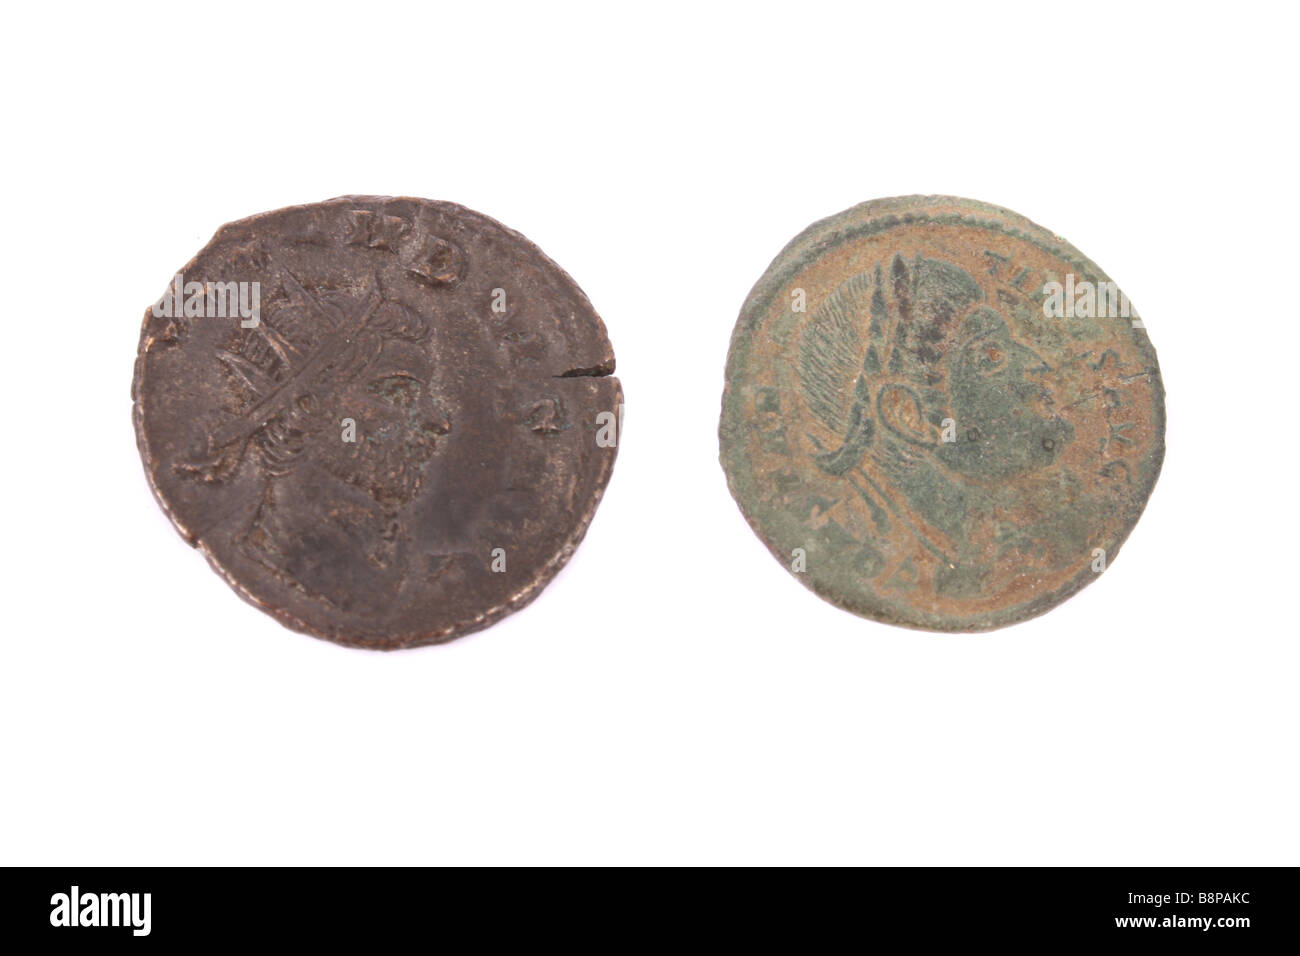 Dos monedas romanas encontradas en Inglaterra. Foto de stock